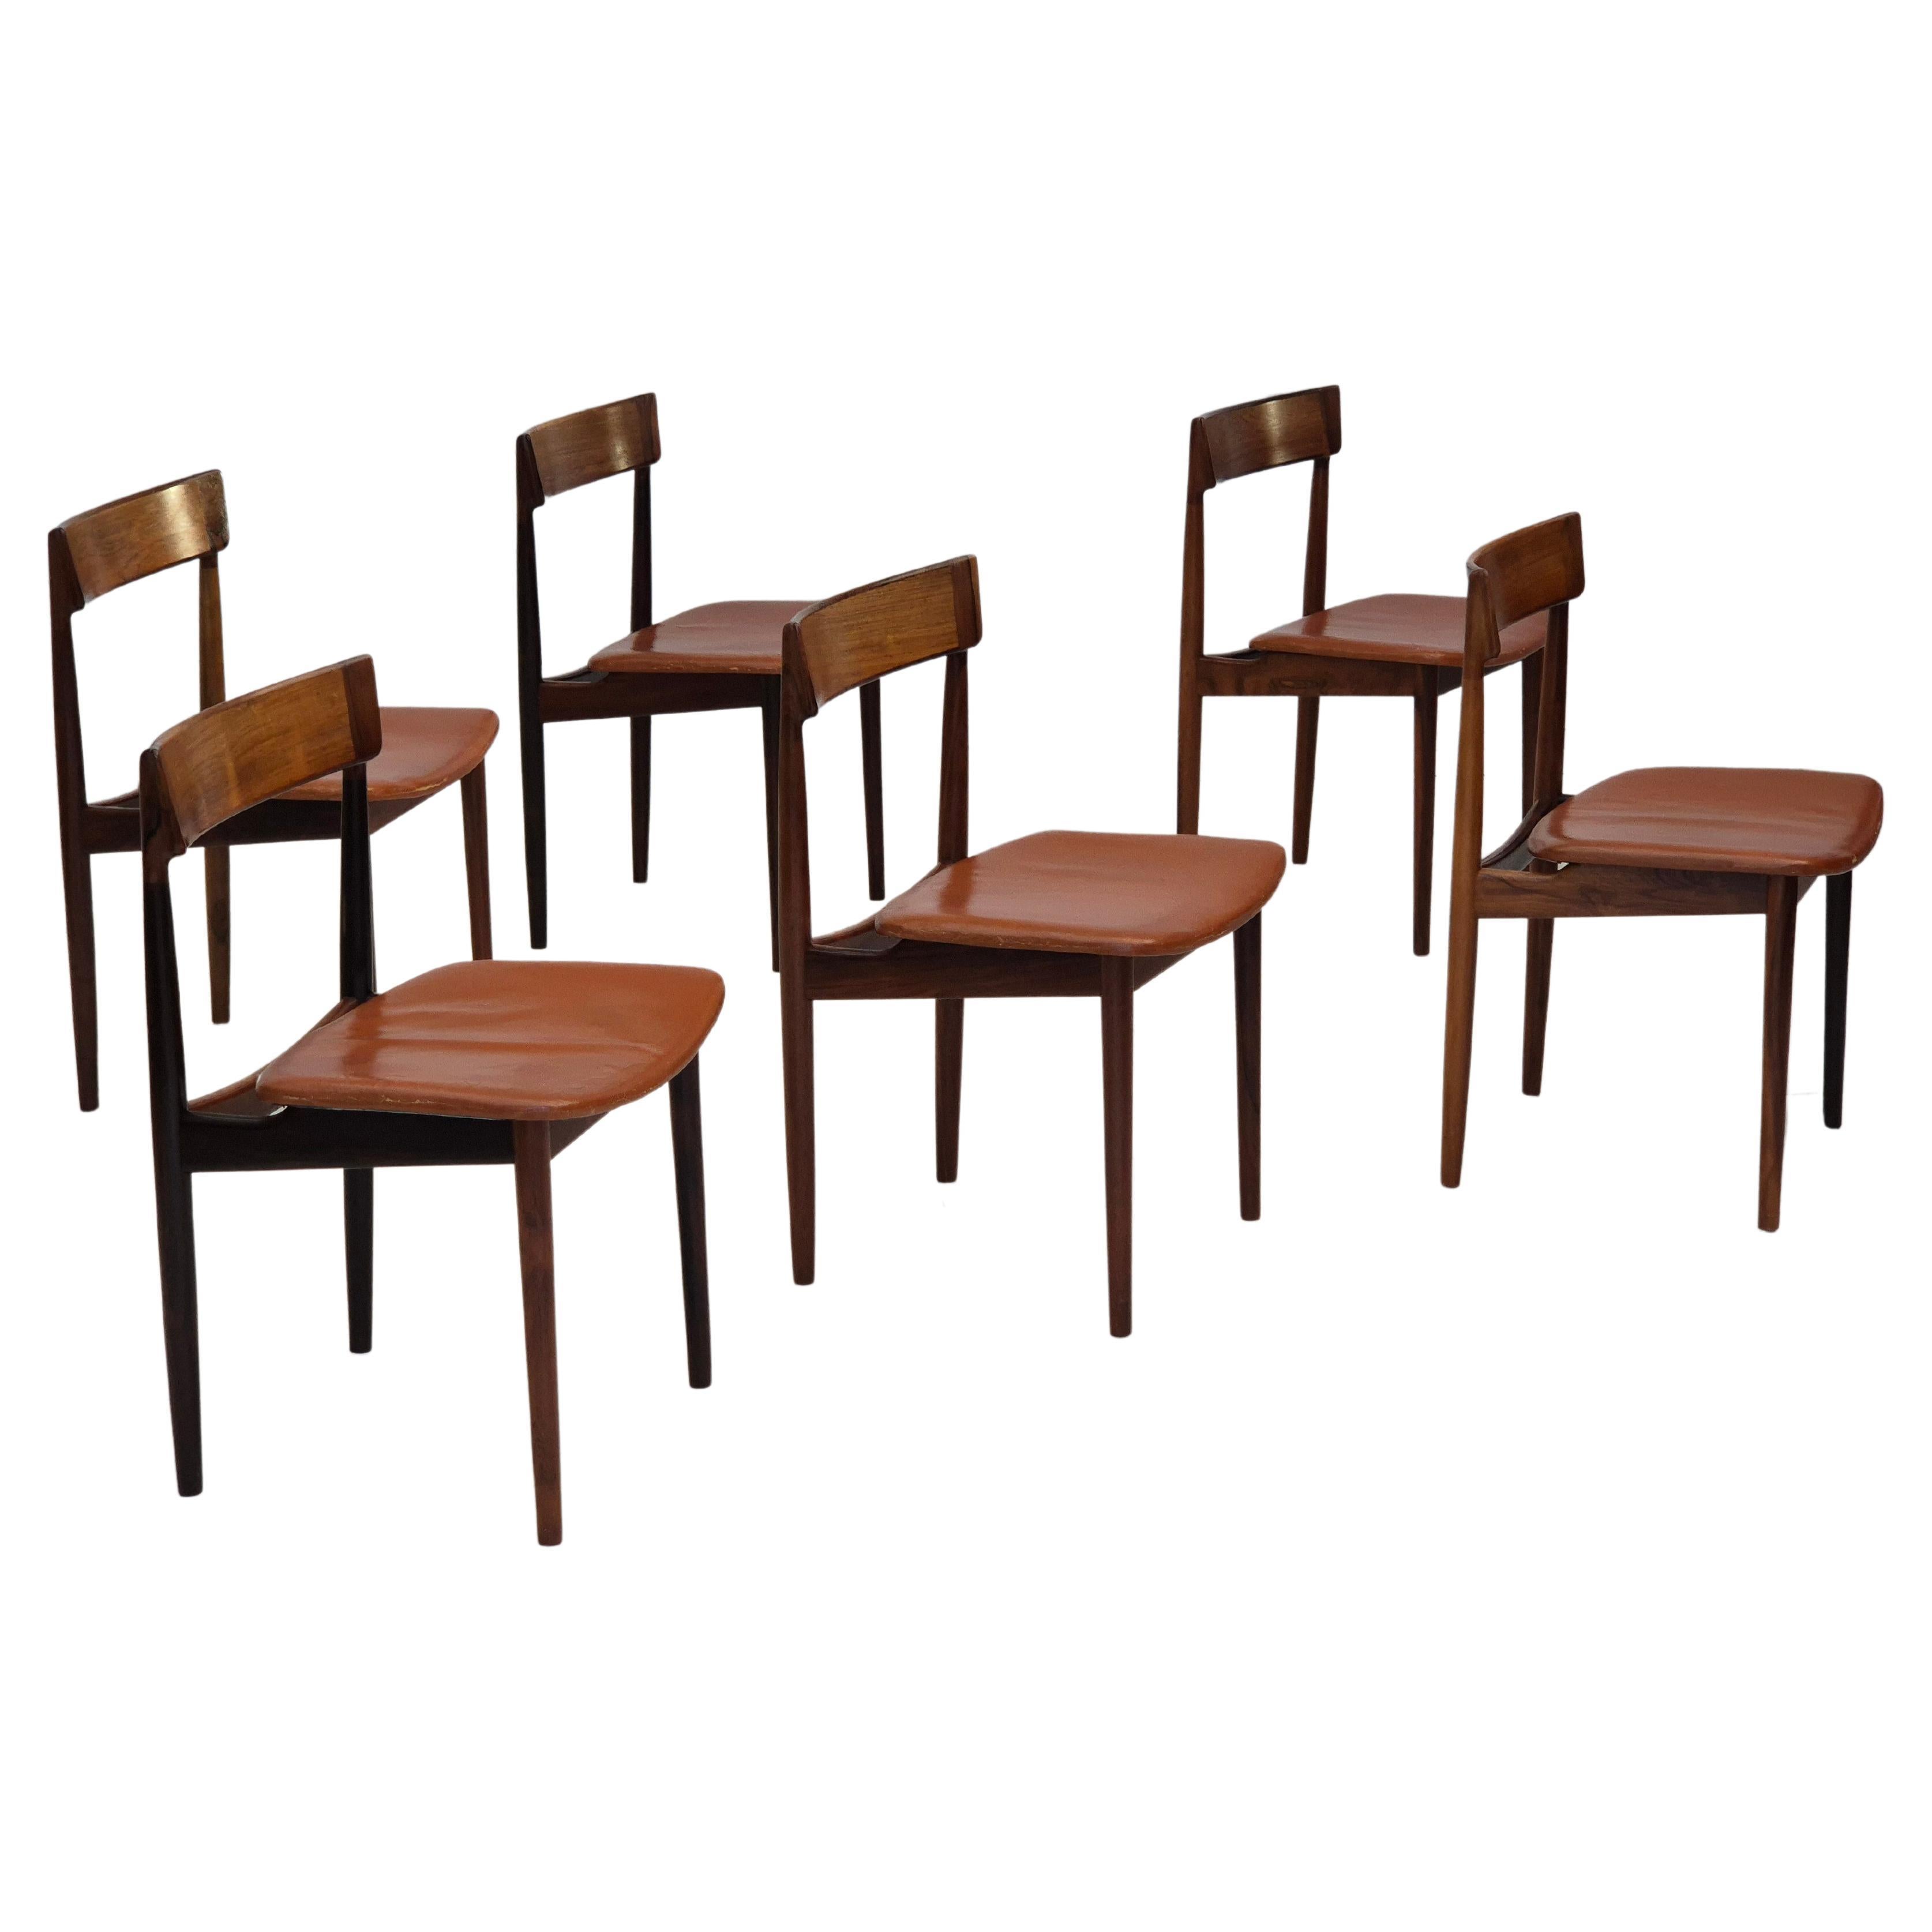 1960s, Danish design by Henry Rosengren Hansen, set of 6 rosewood dinning chairs